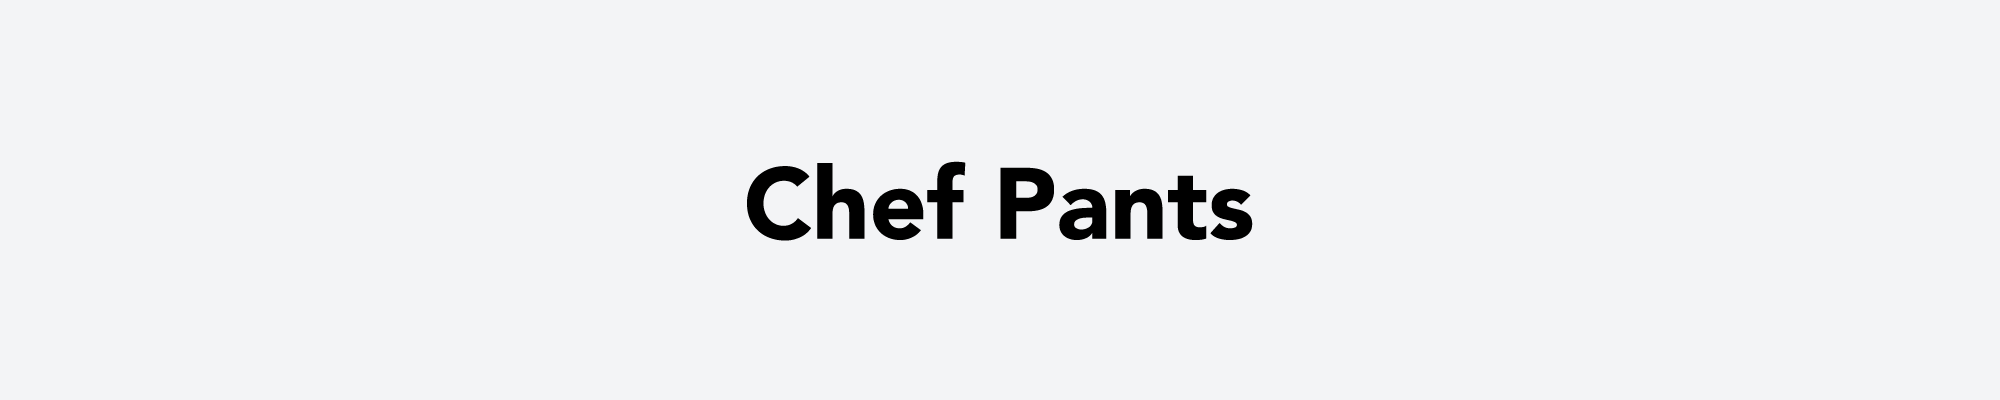 Chef Pants